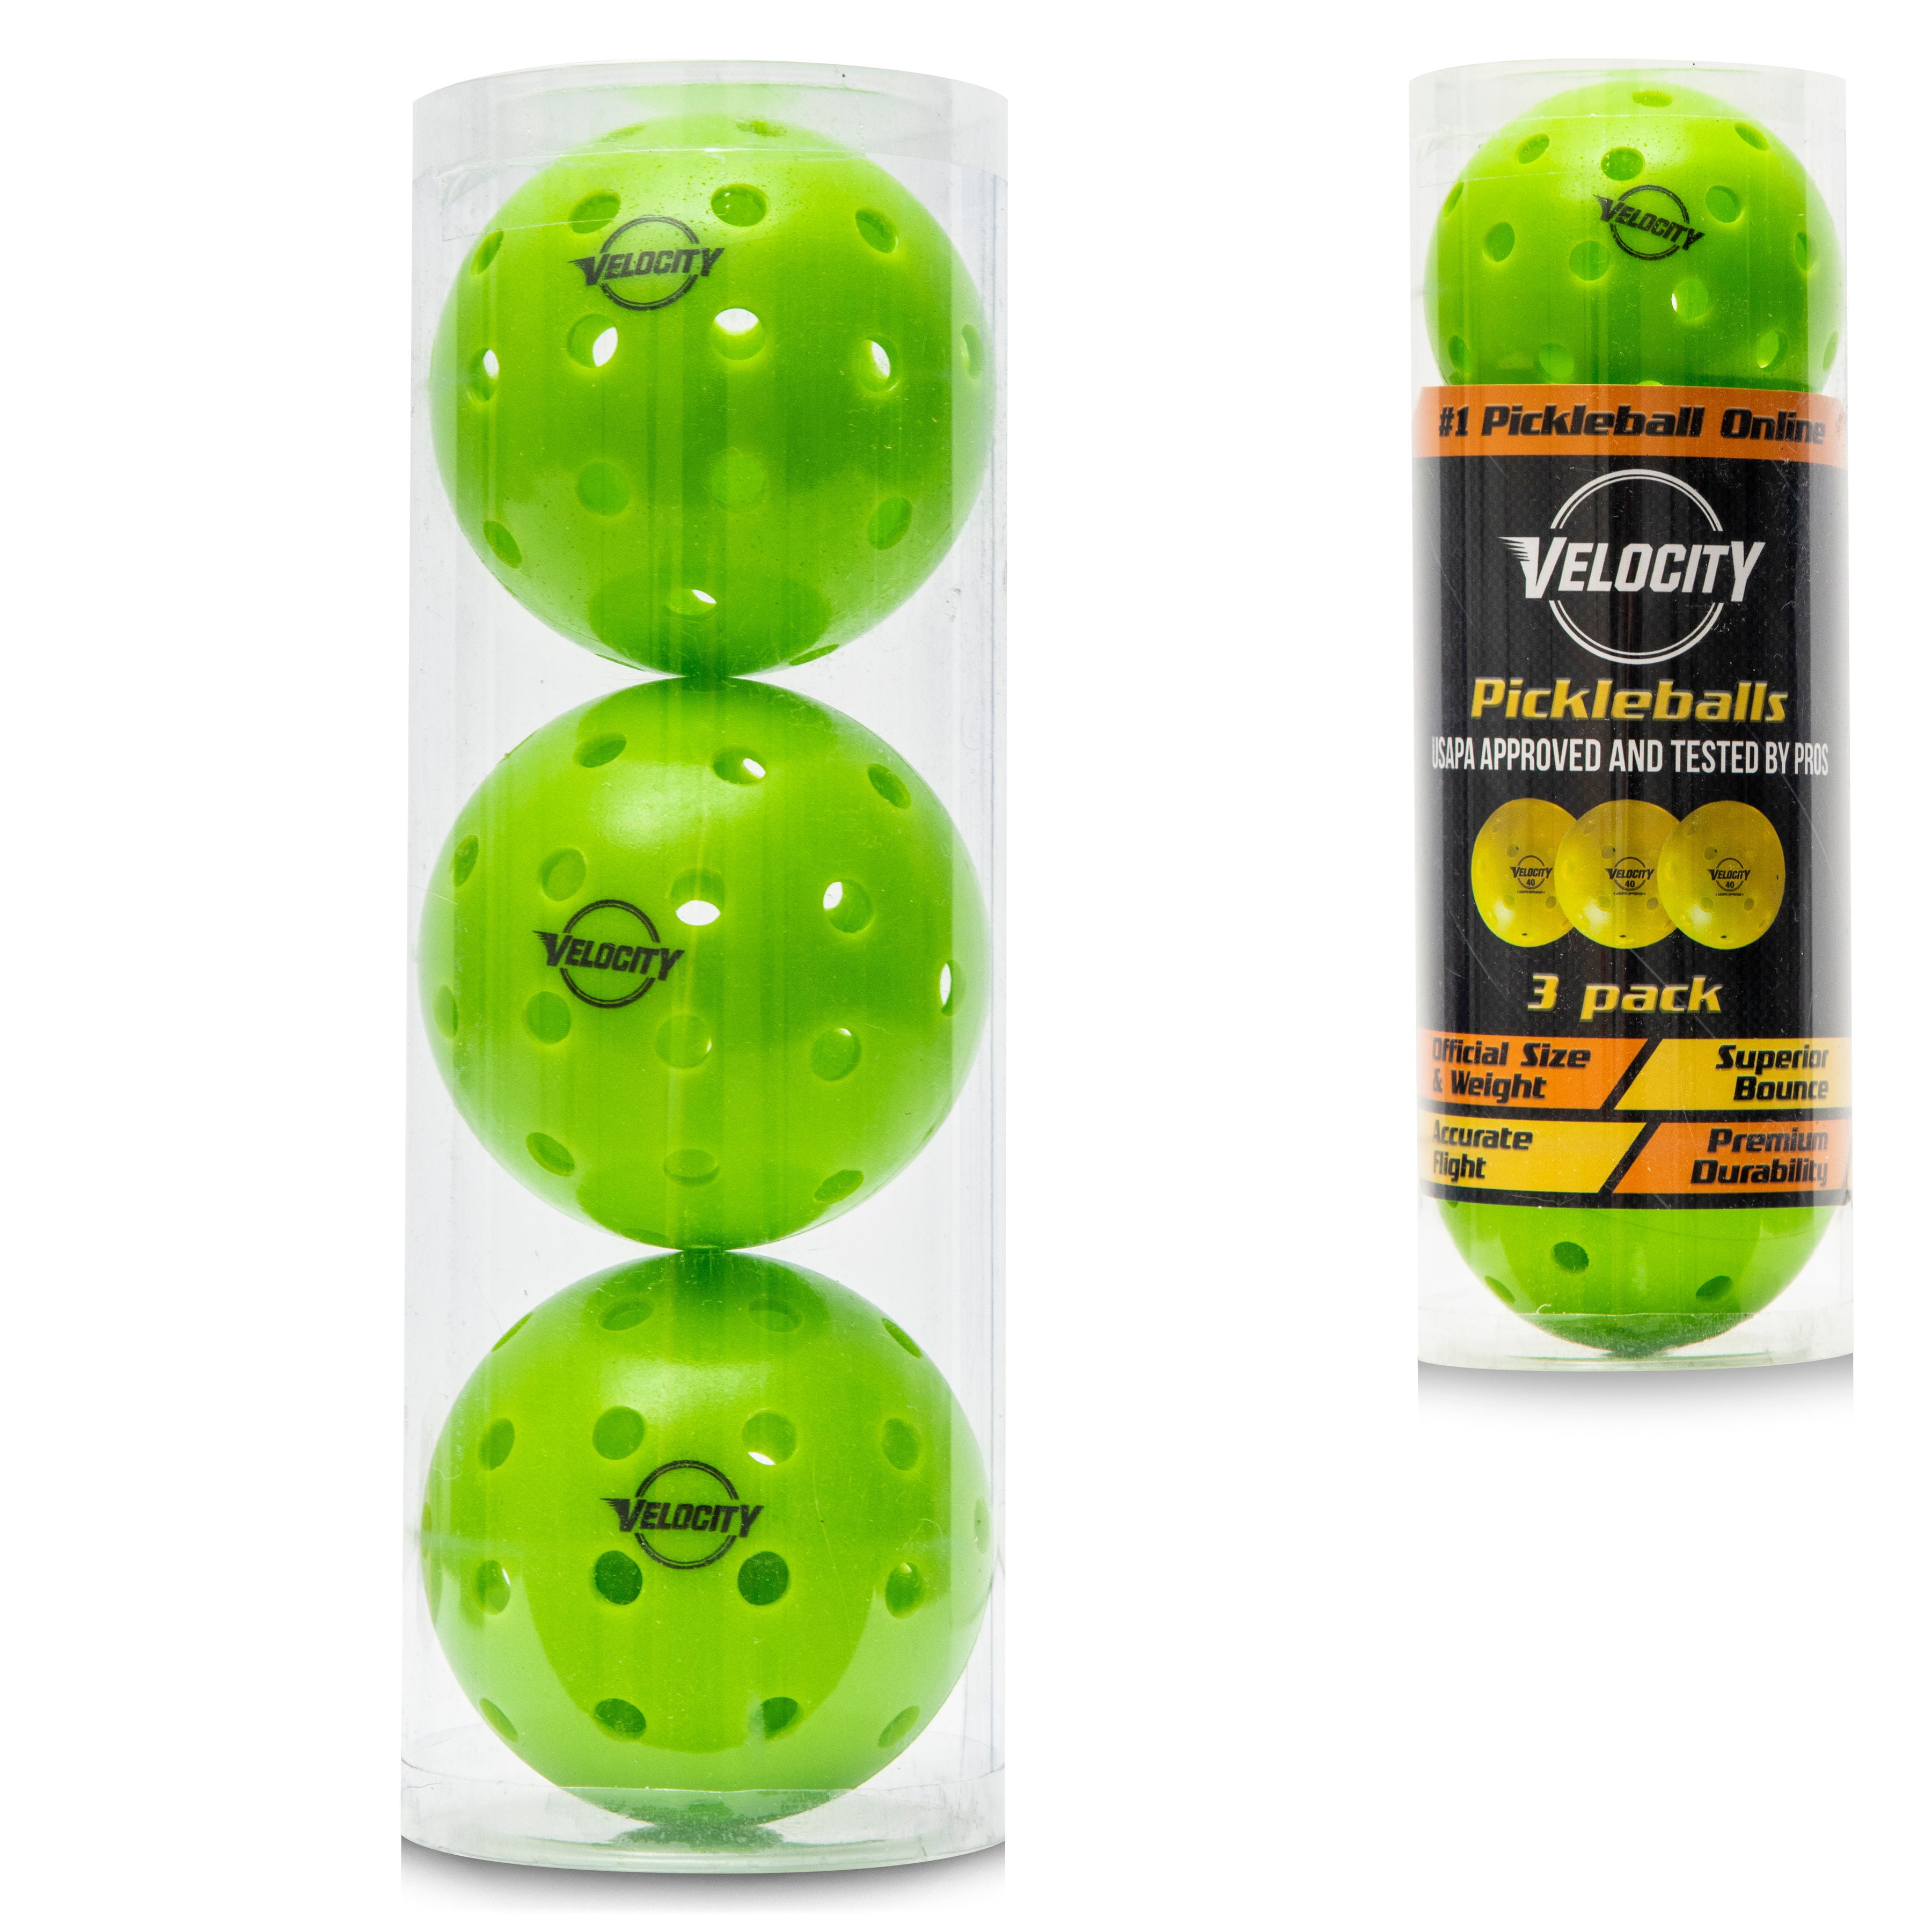 Onix Pure 2 Indoor Pickleball Balls Orange 3pack for sale online 